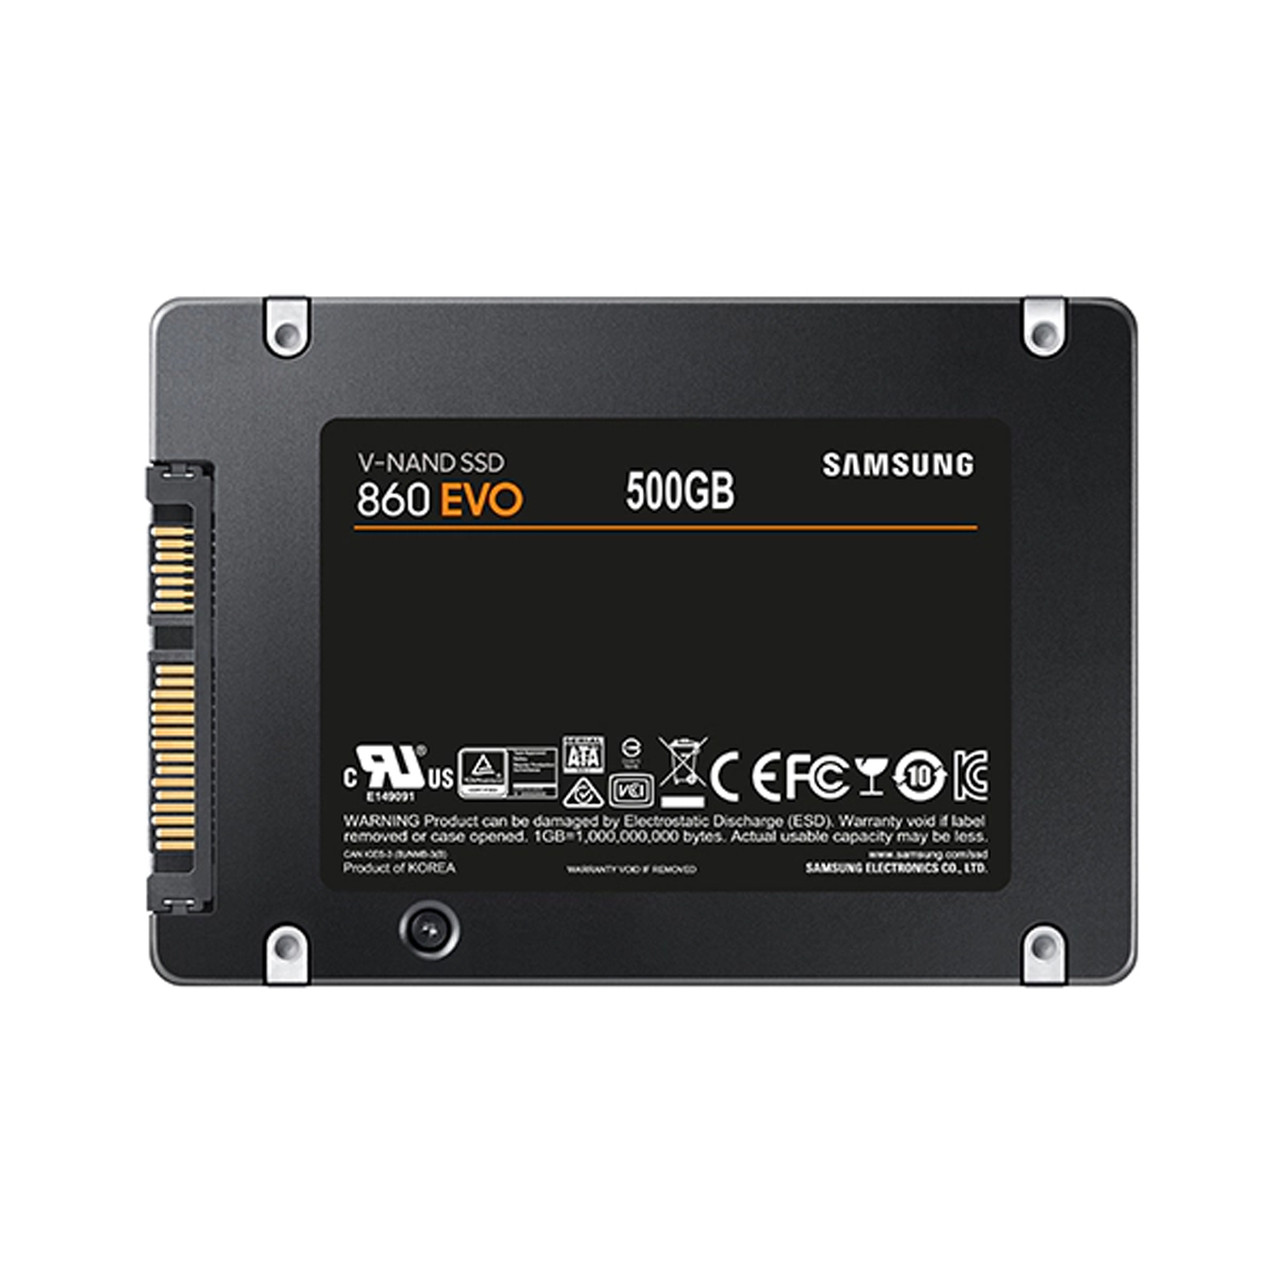 Samsung MZ-76E500E 860 EVO 500GB 2.5-Inch SATA III Internal SSD 5 Year Warranty - White Box